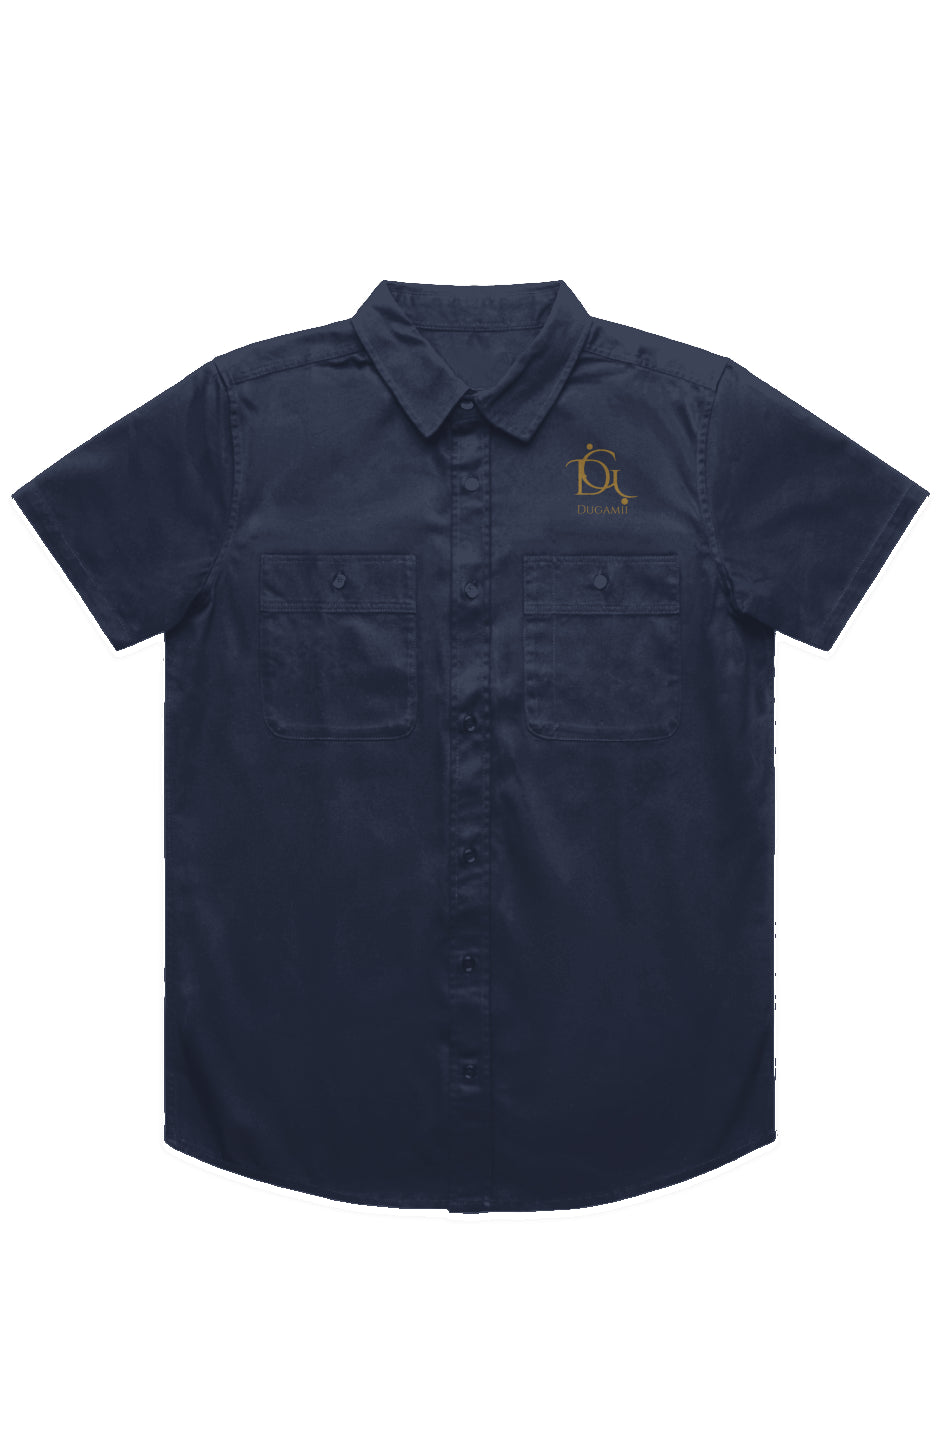 DuGamii Blue Limited Edition Workwear S/S Shirt